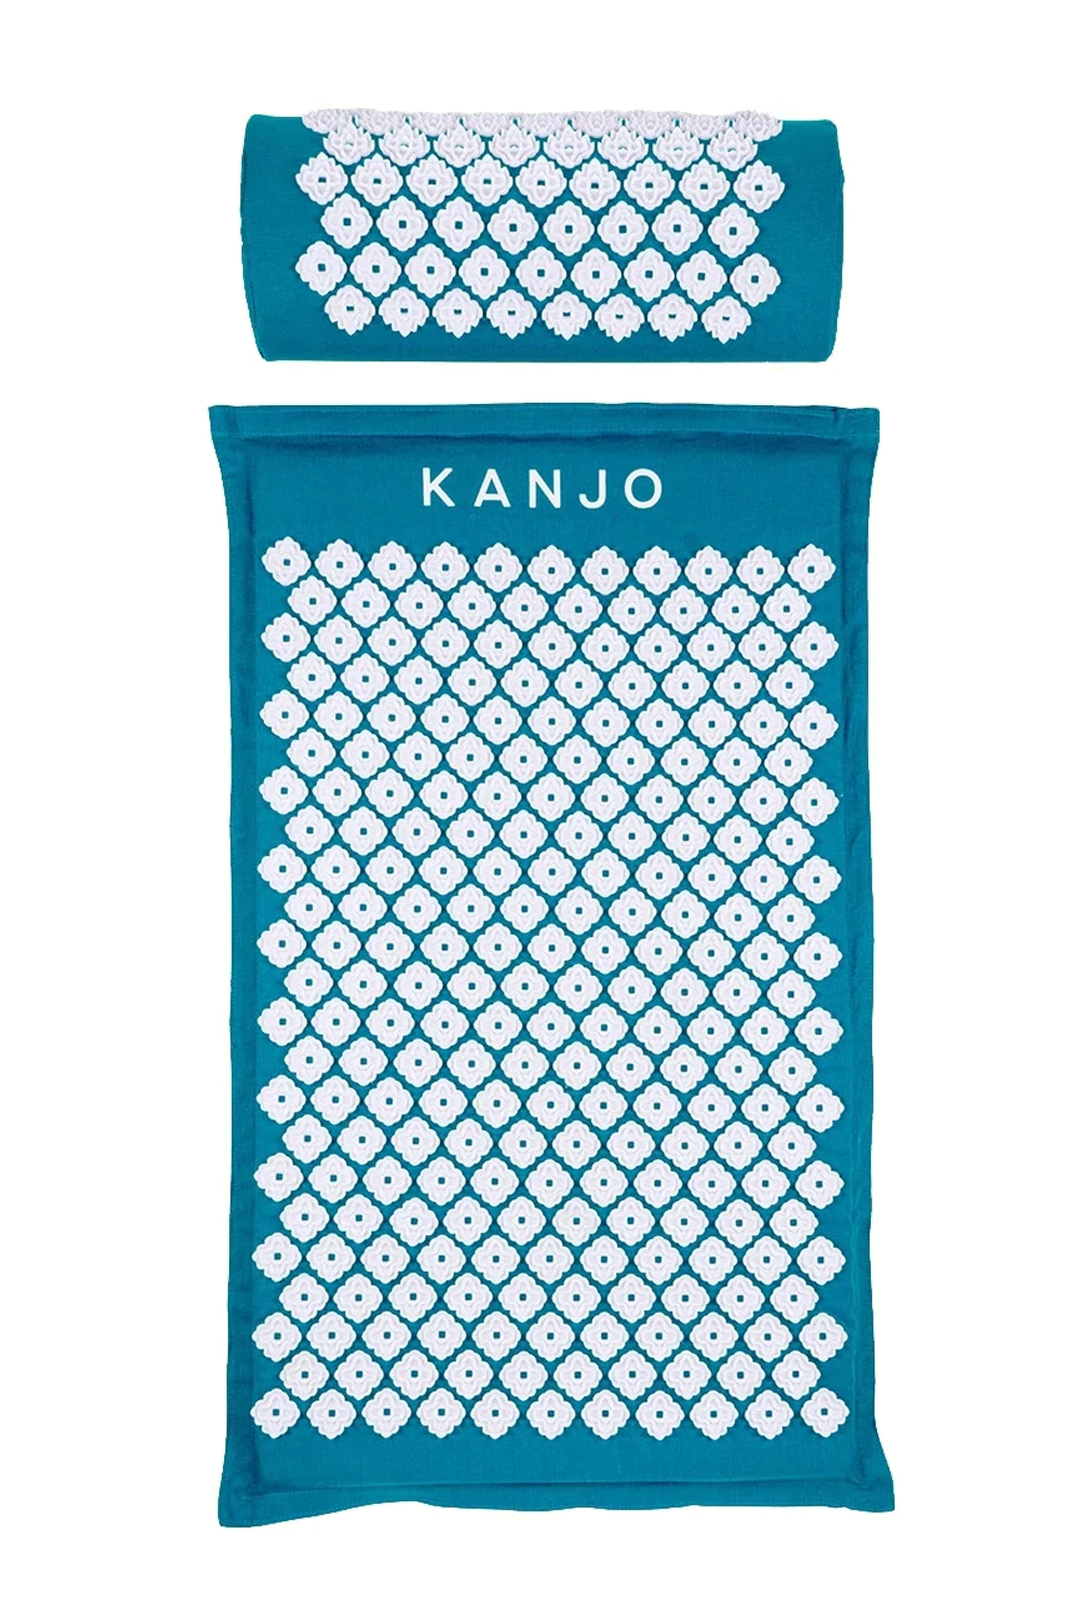 Kanjo Memory Foam Acupressure Mat Set, Large